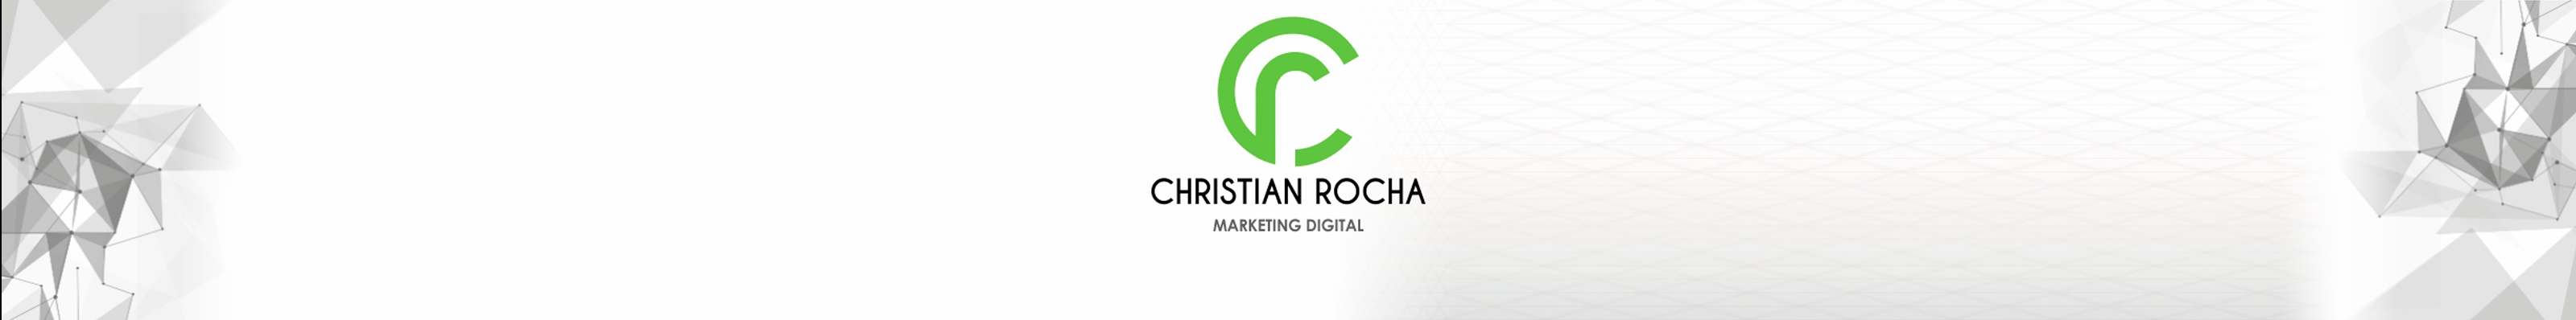 Profil-Banner von Christian Rocha